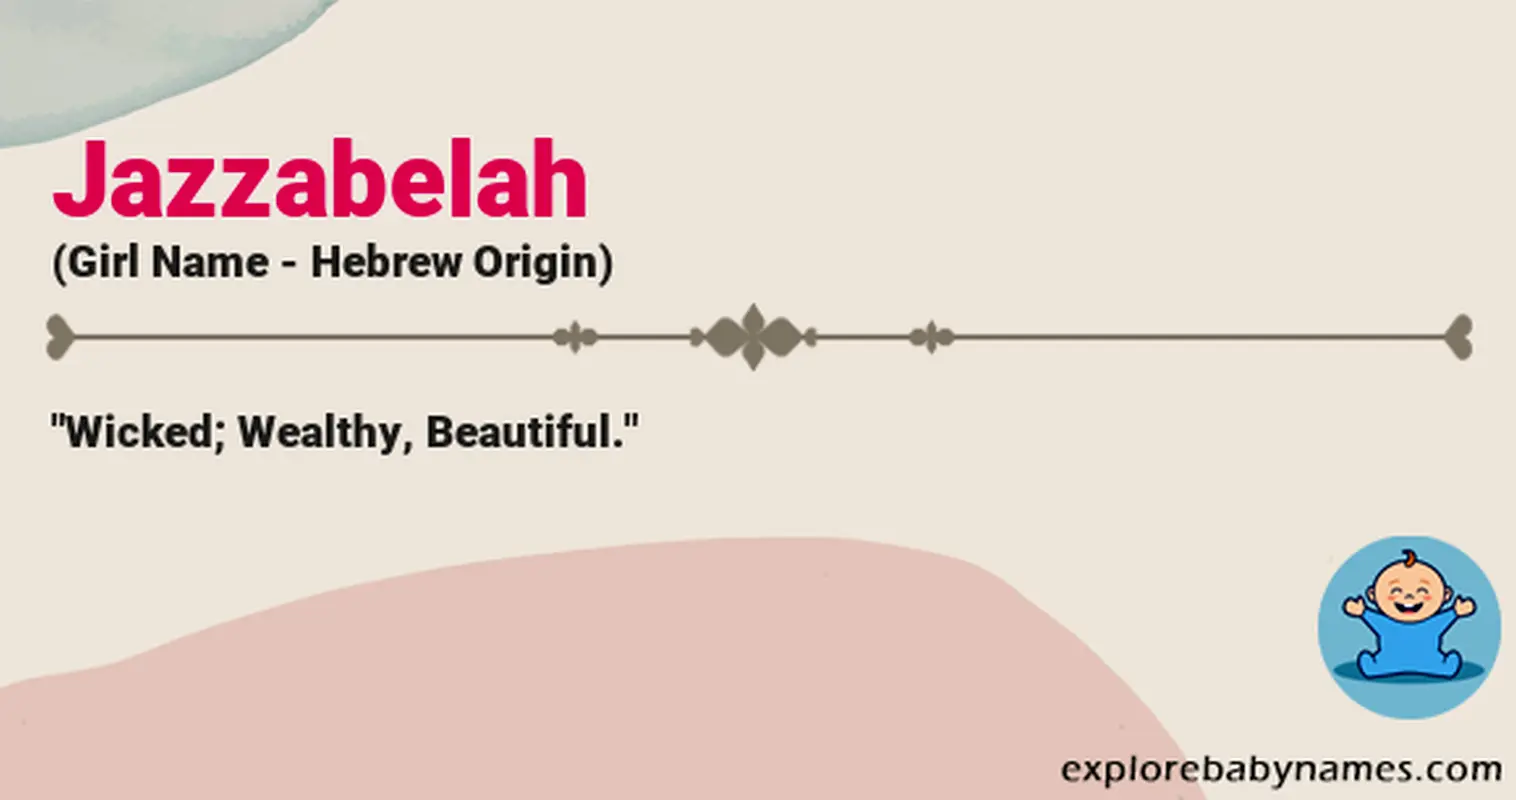 Meaning of Jazzabelah